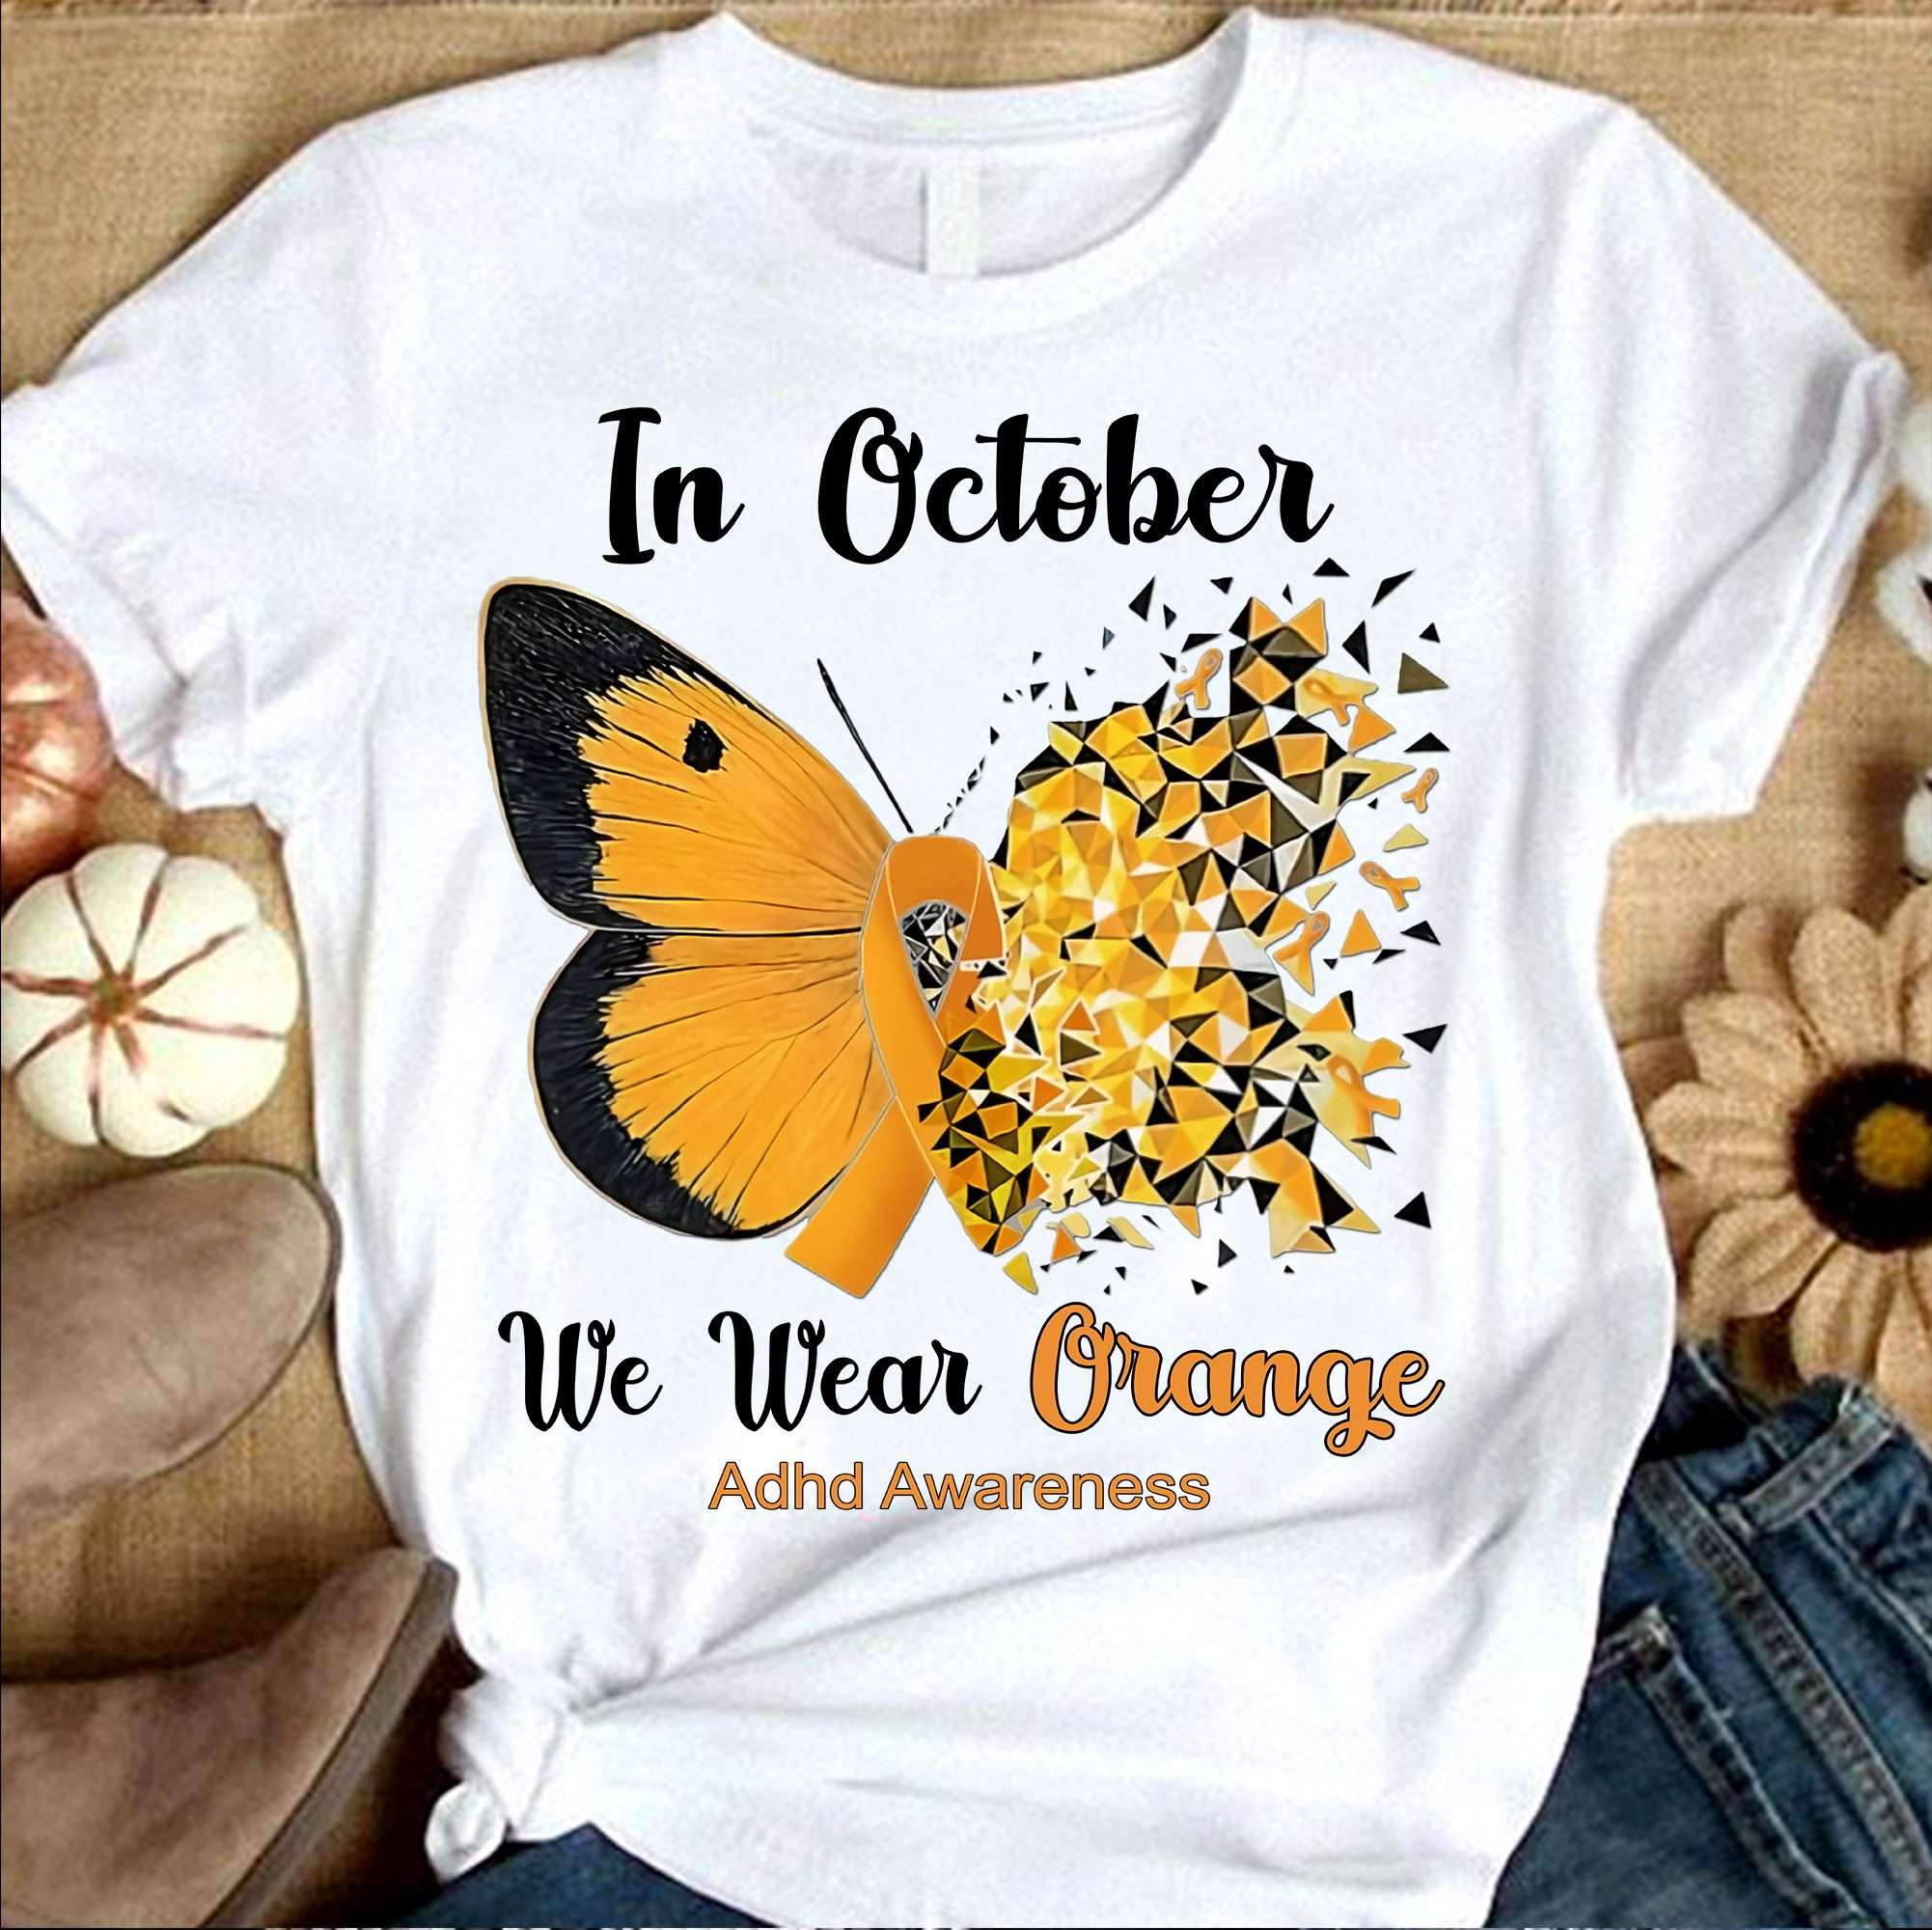 Shirt, wear FridayStuff orange awareness, butterfly october ribbon In Sweatshirt - orange Adhd we - Hoodie,